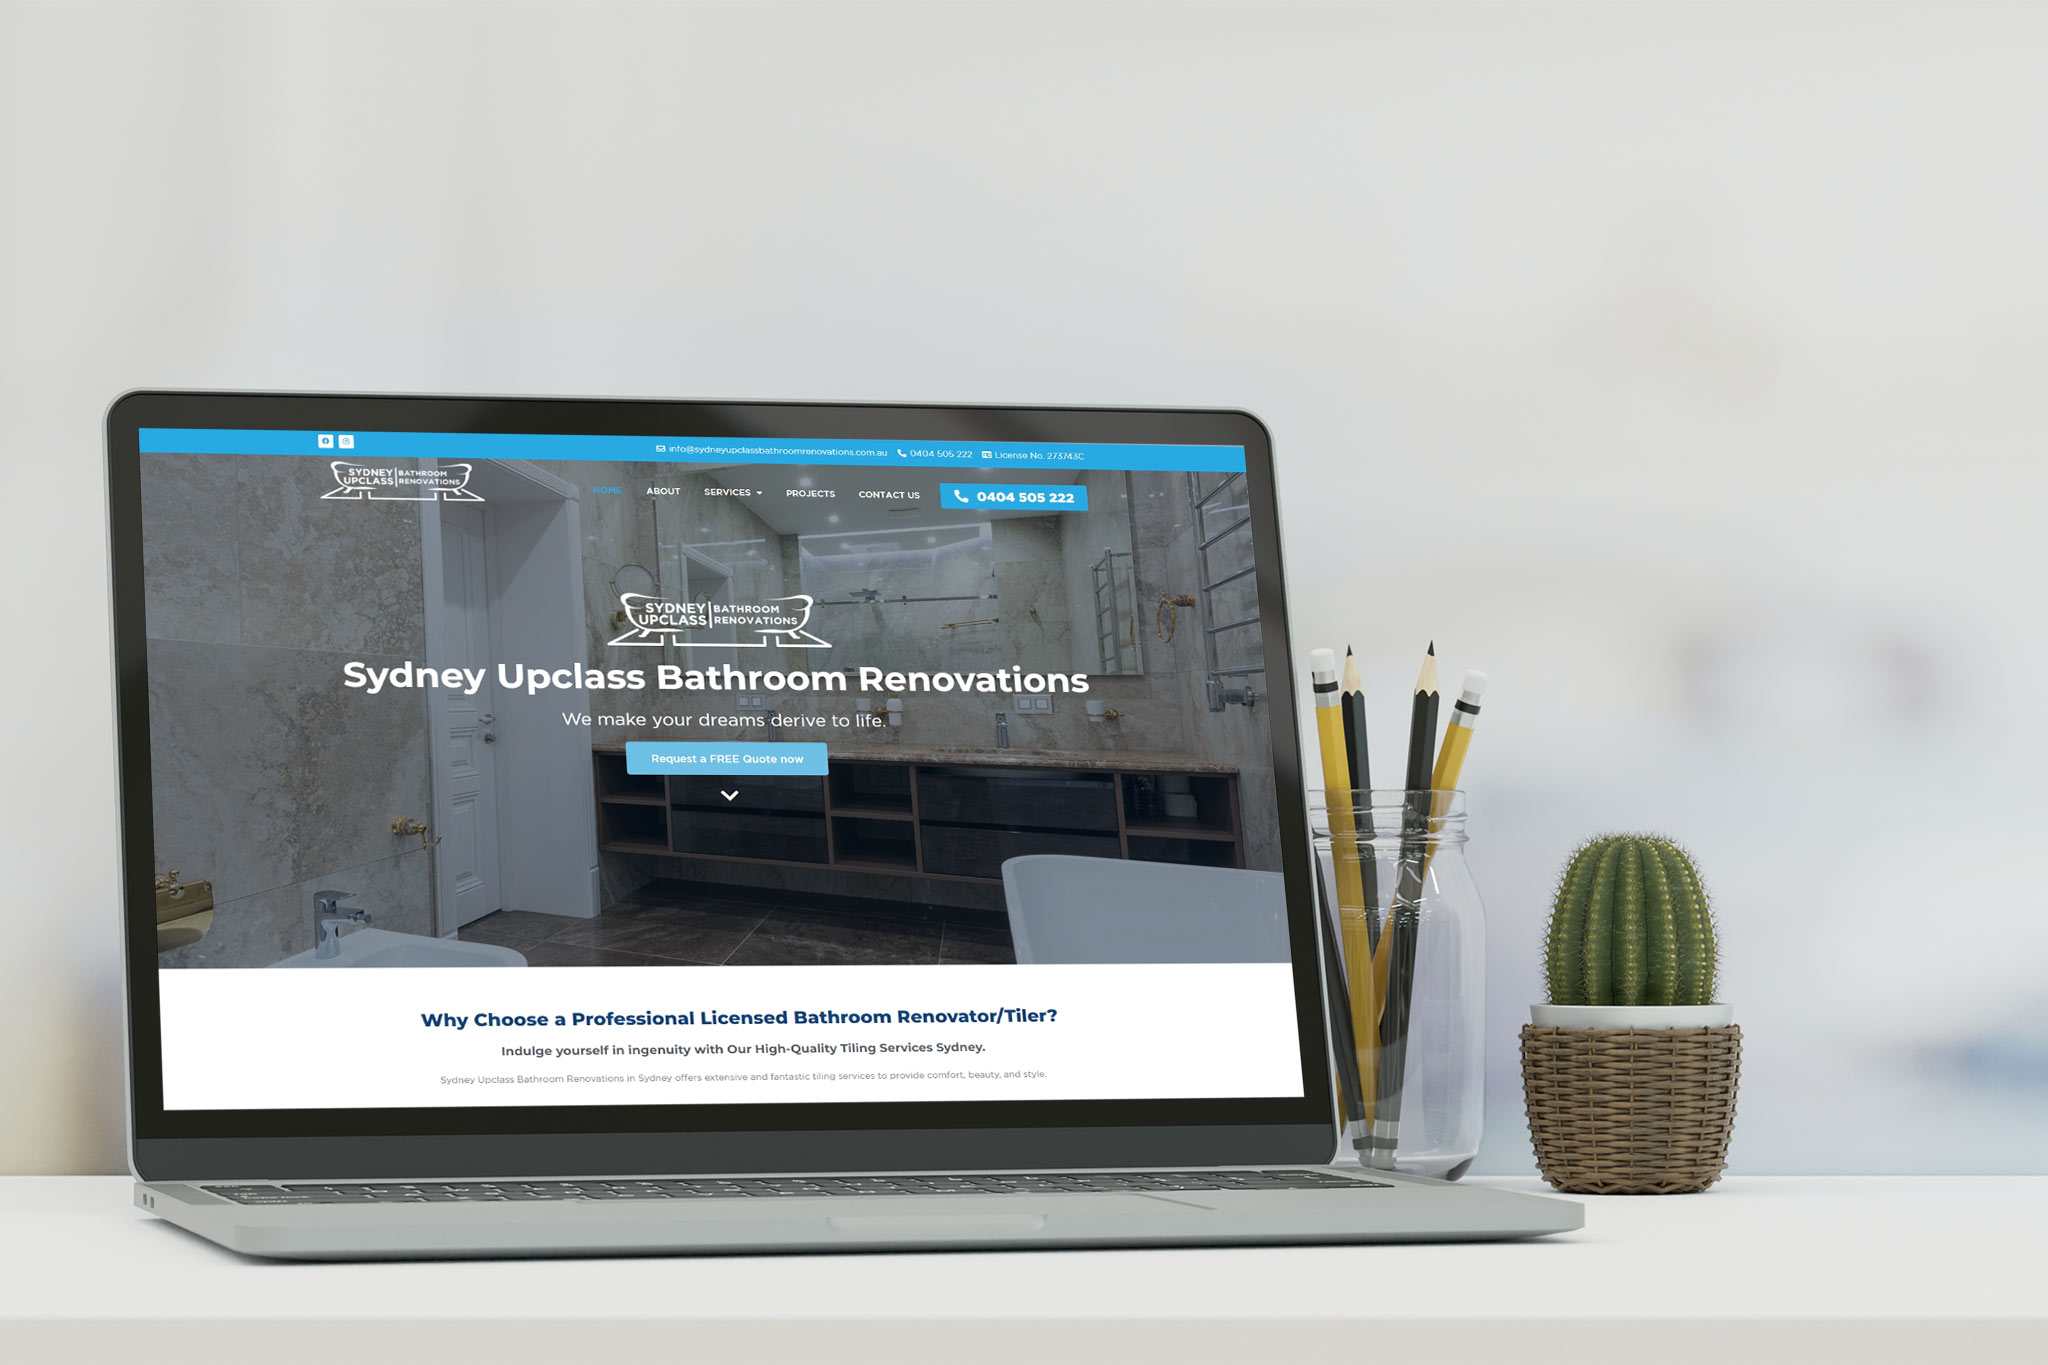 Sydney Upclass Bathroom Renovations Website